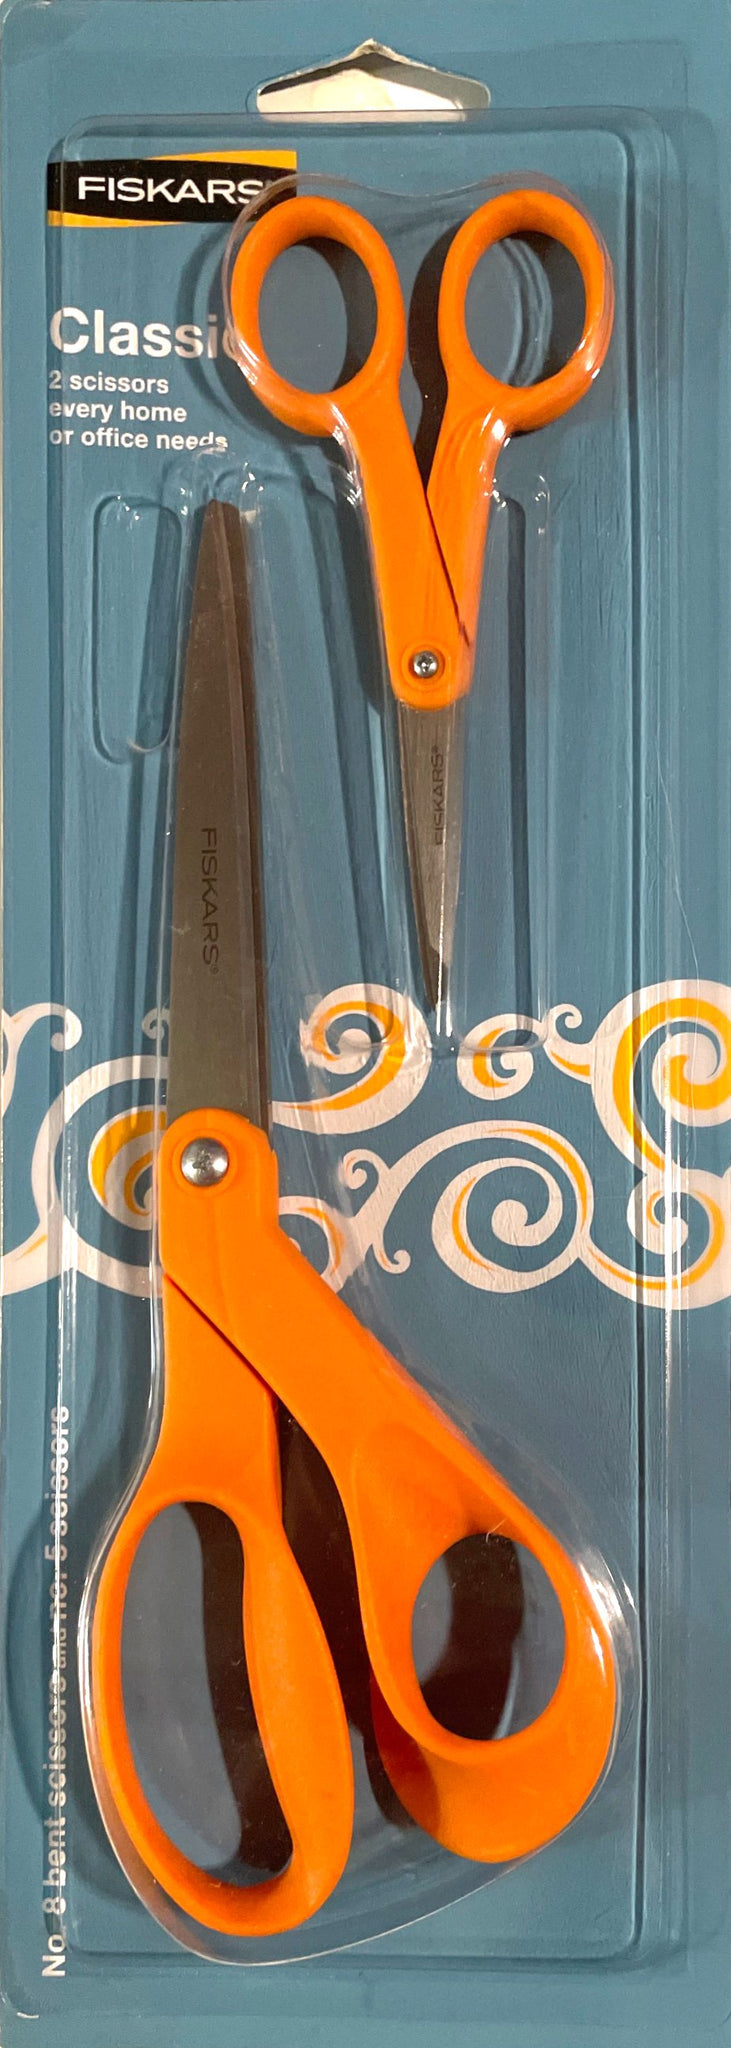 Fiskars Classic kitchen scissors